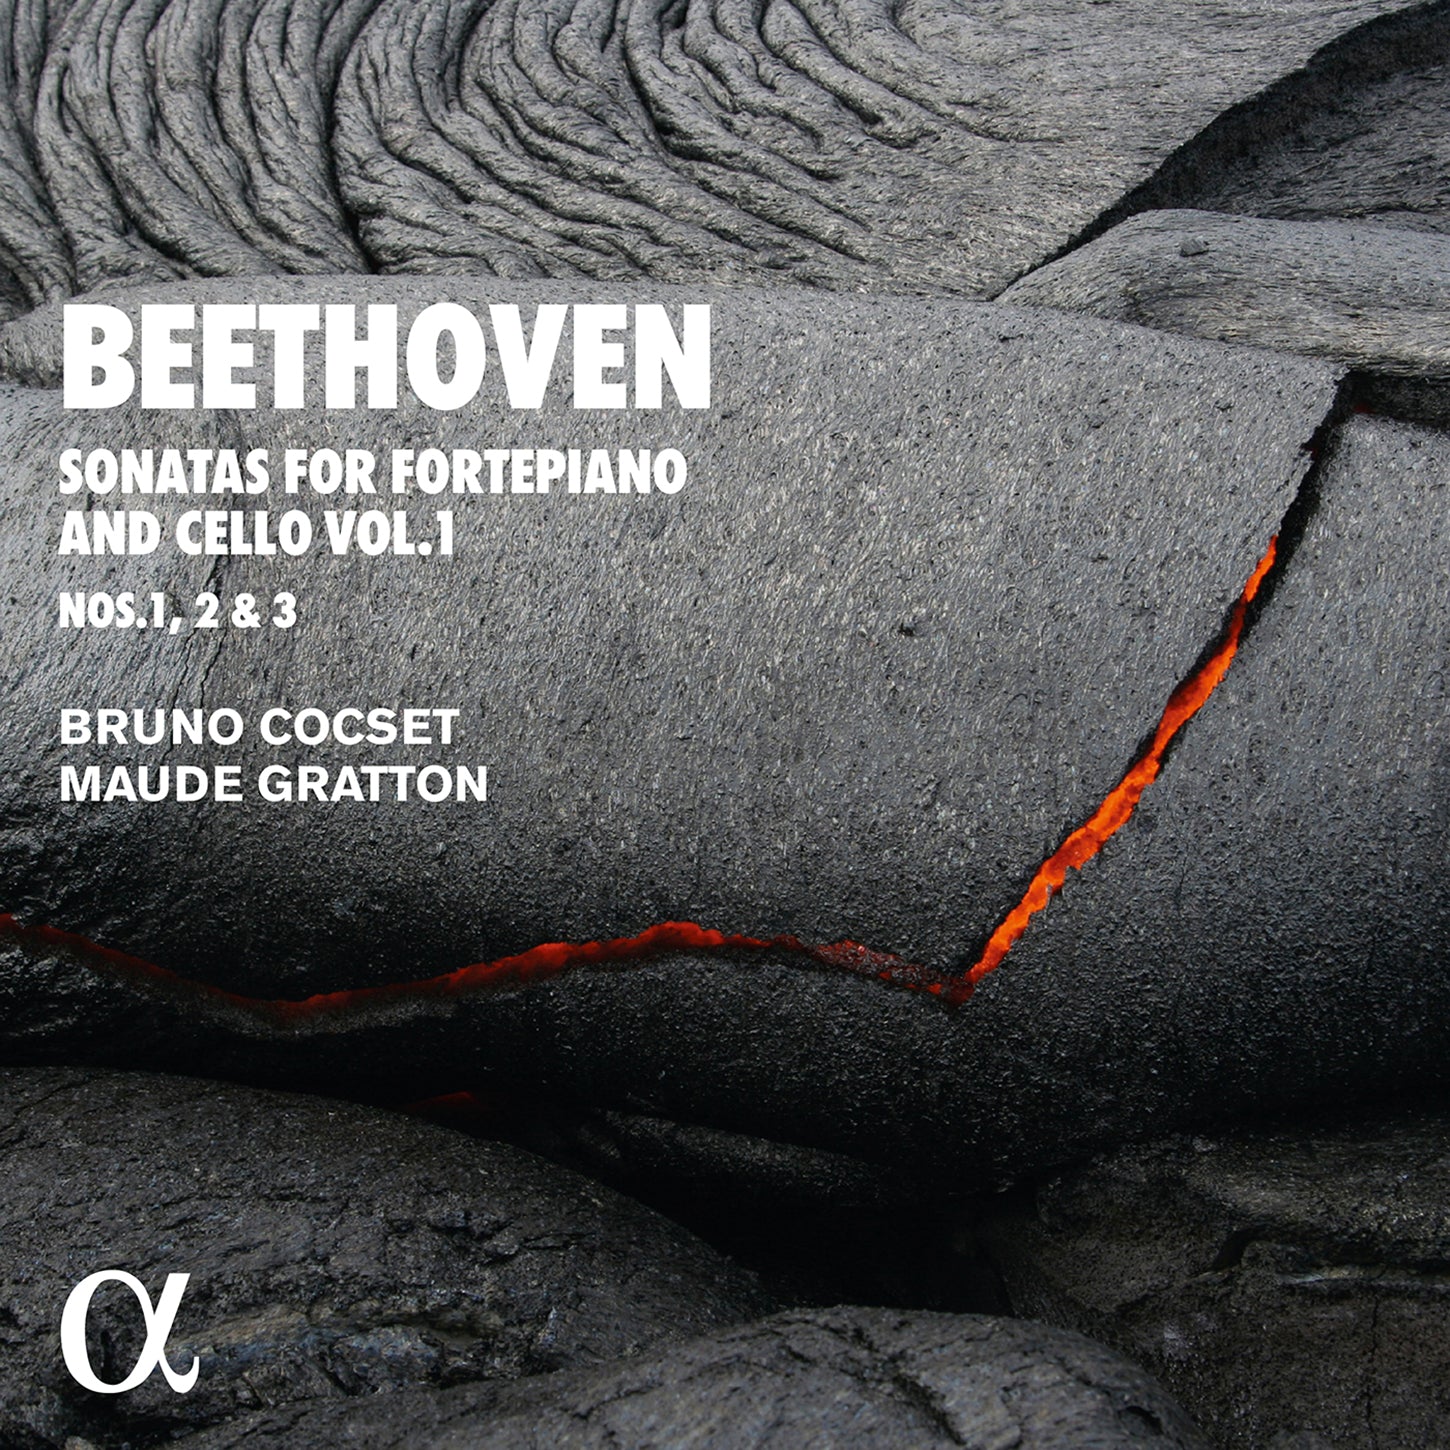 Beethoven: Sonatas for Fortepiano & Cello Vol. 1 / Cocset, Gratton